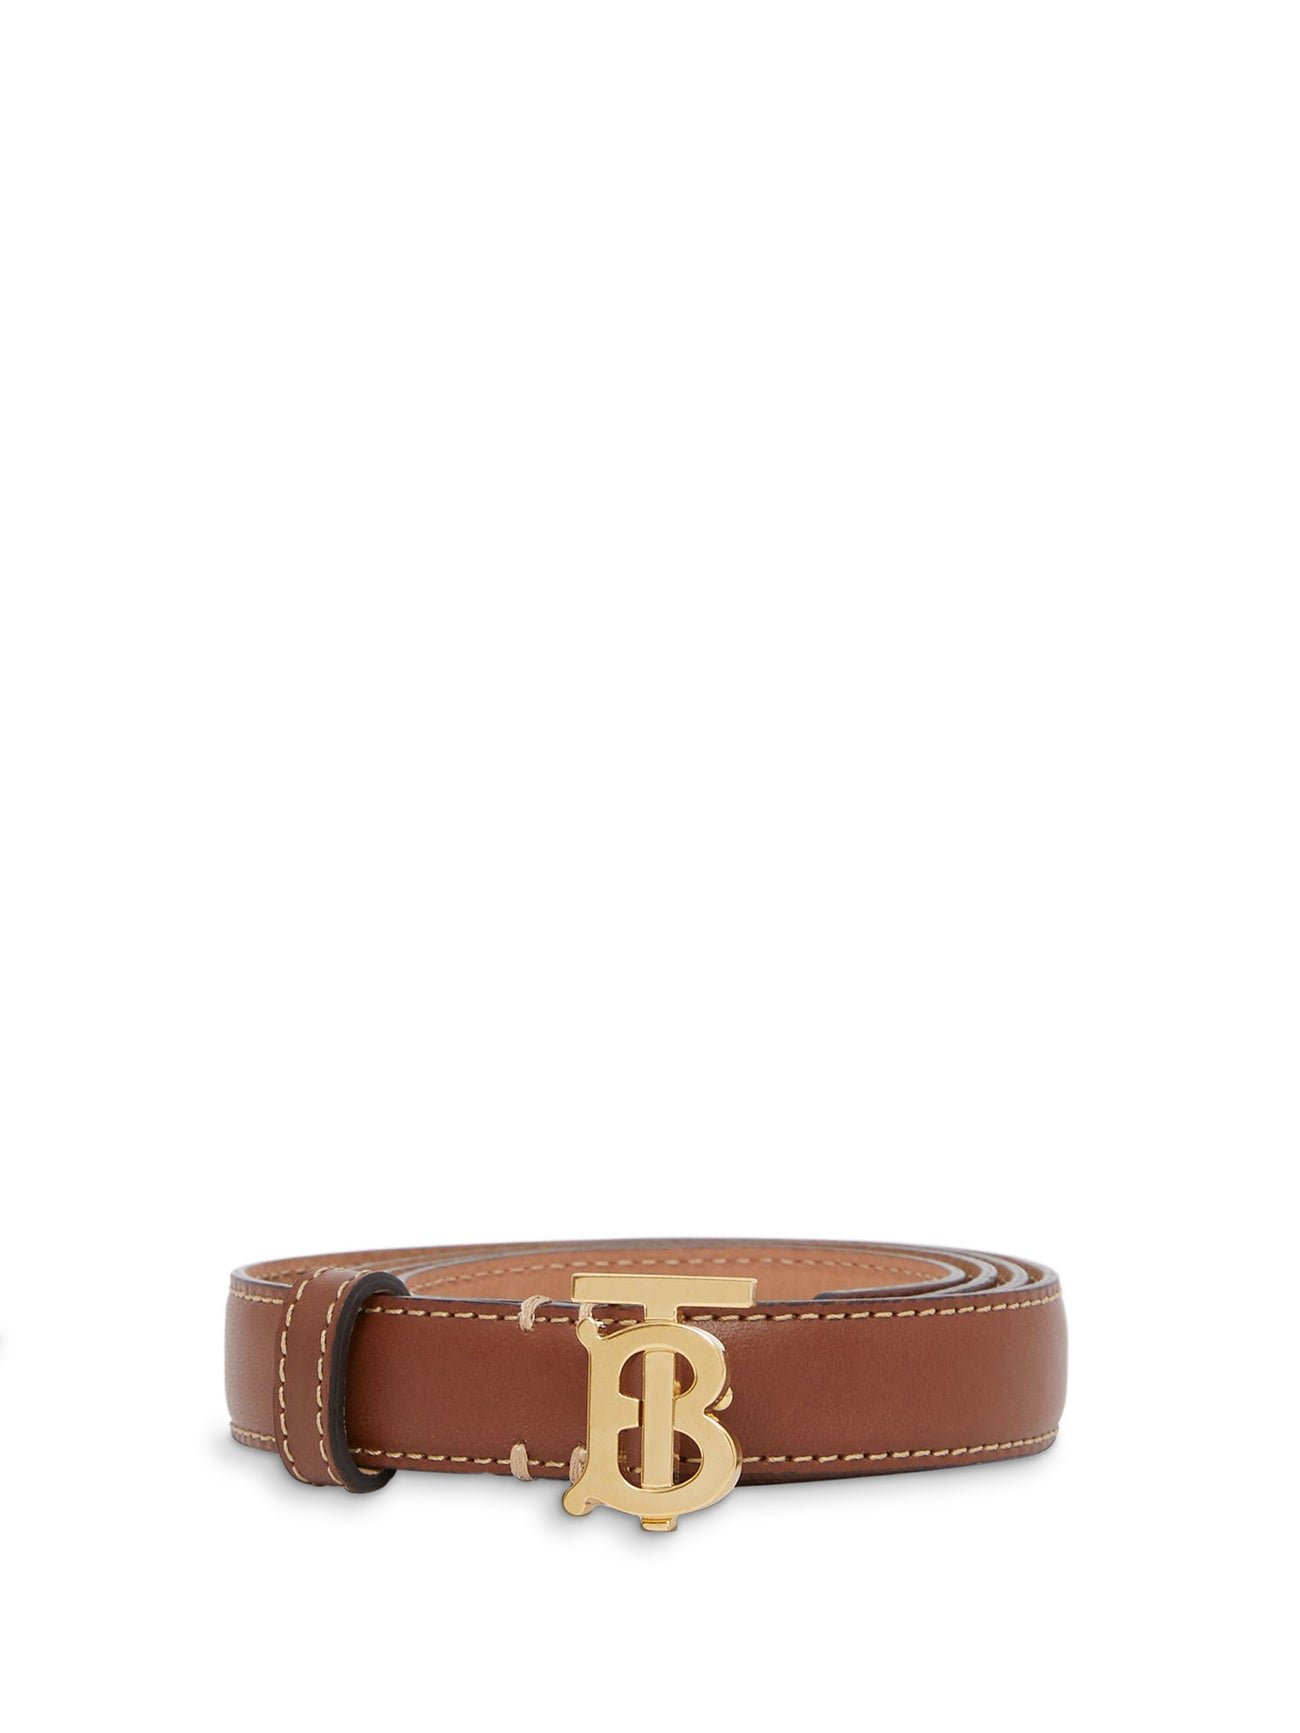 Burberry - TB leather belt bag - mytheresa.com